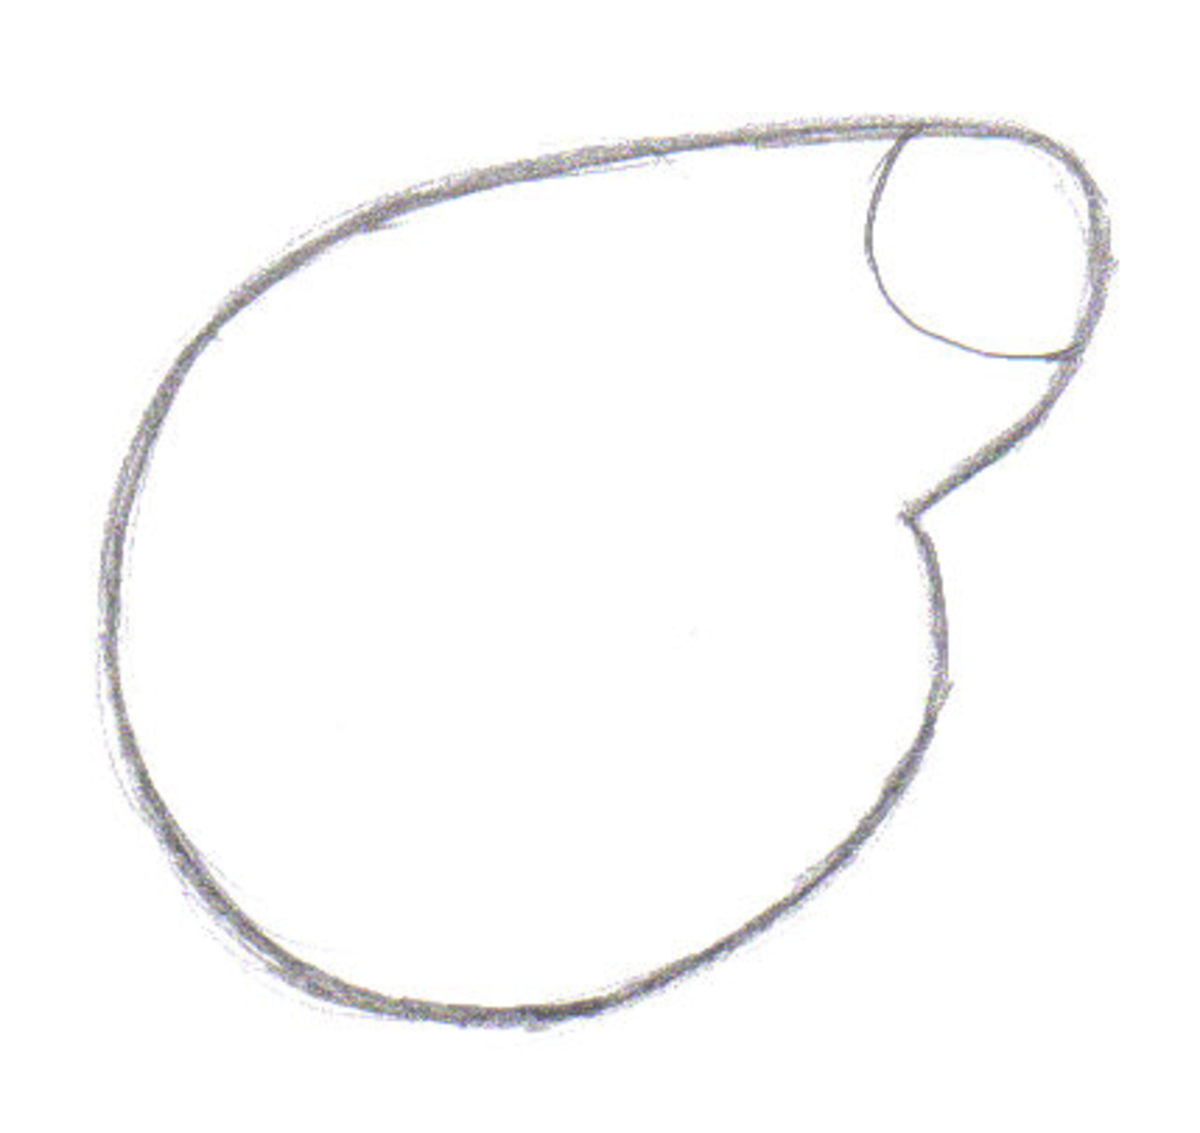 Draw the head shape.